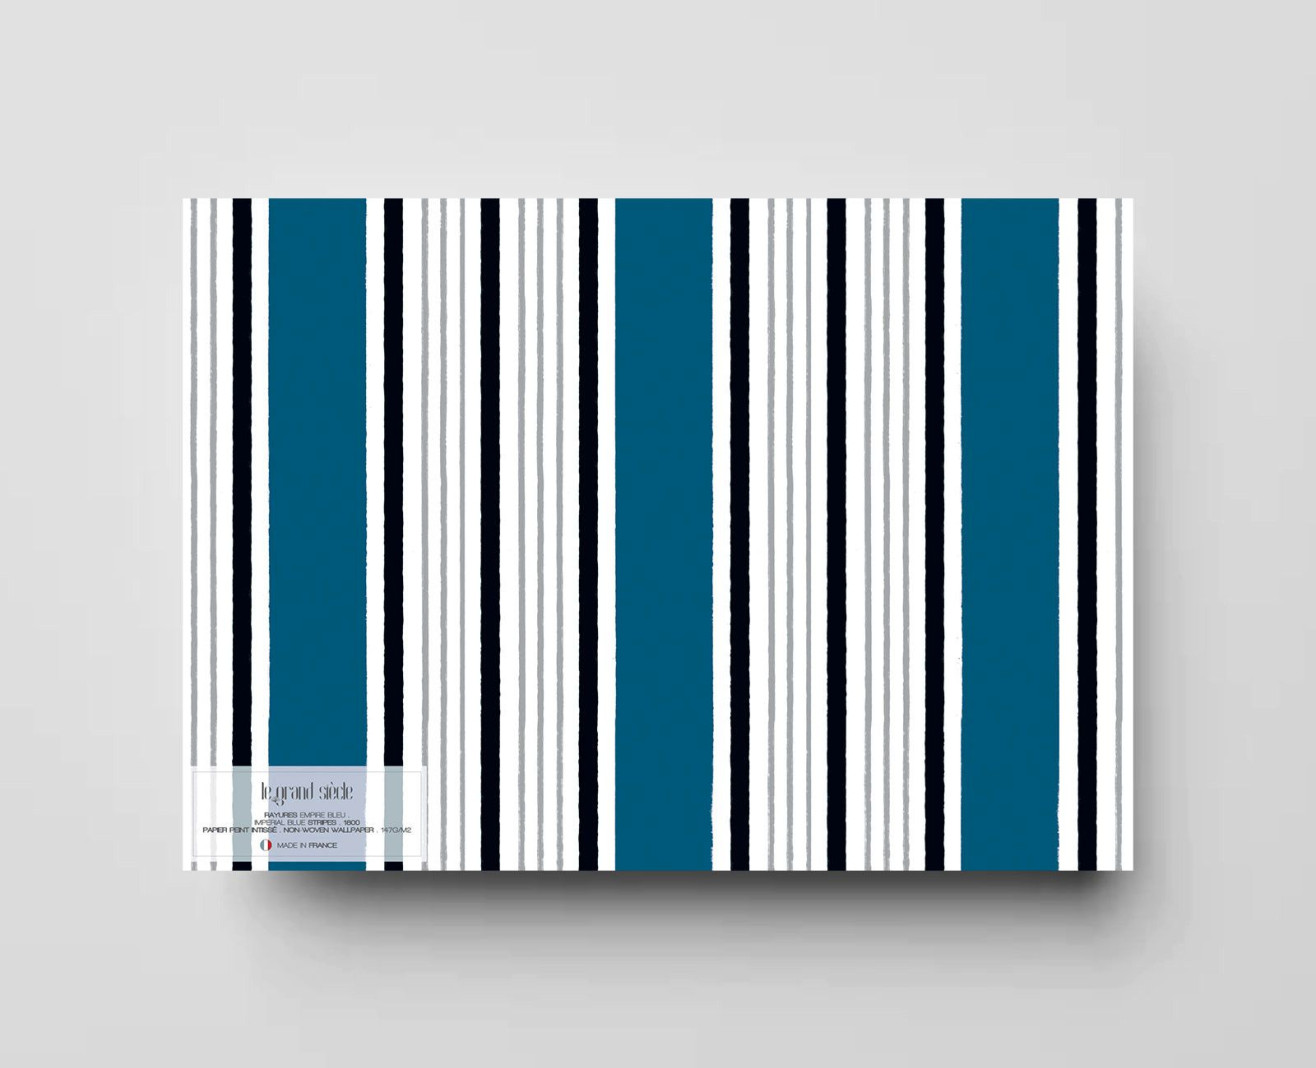 Wallpaper blue Imperial stripes . 1800